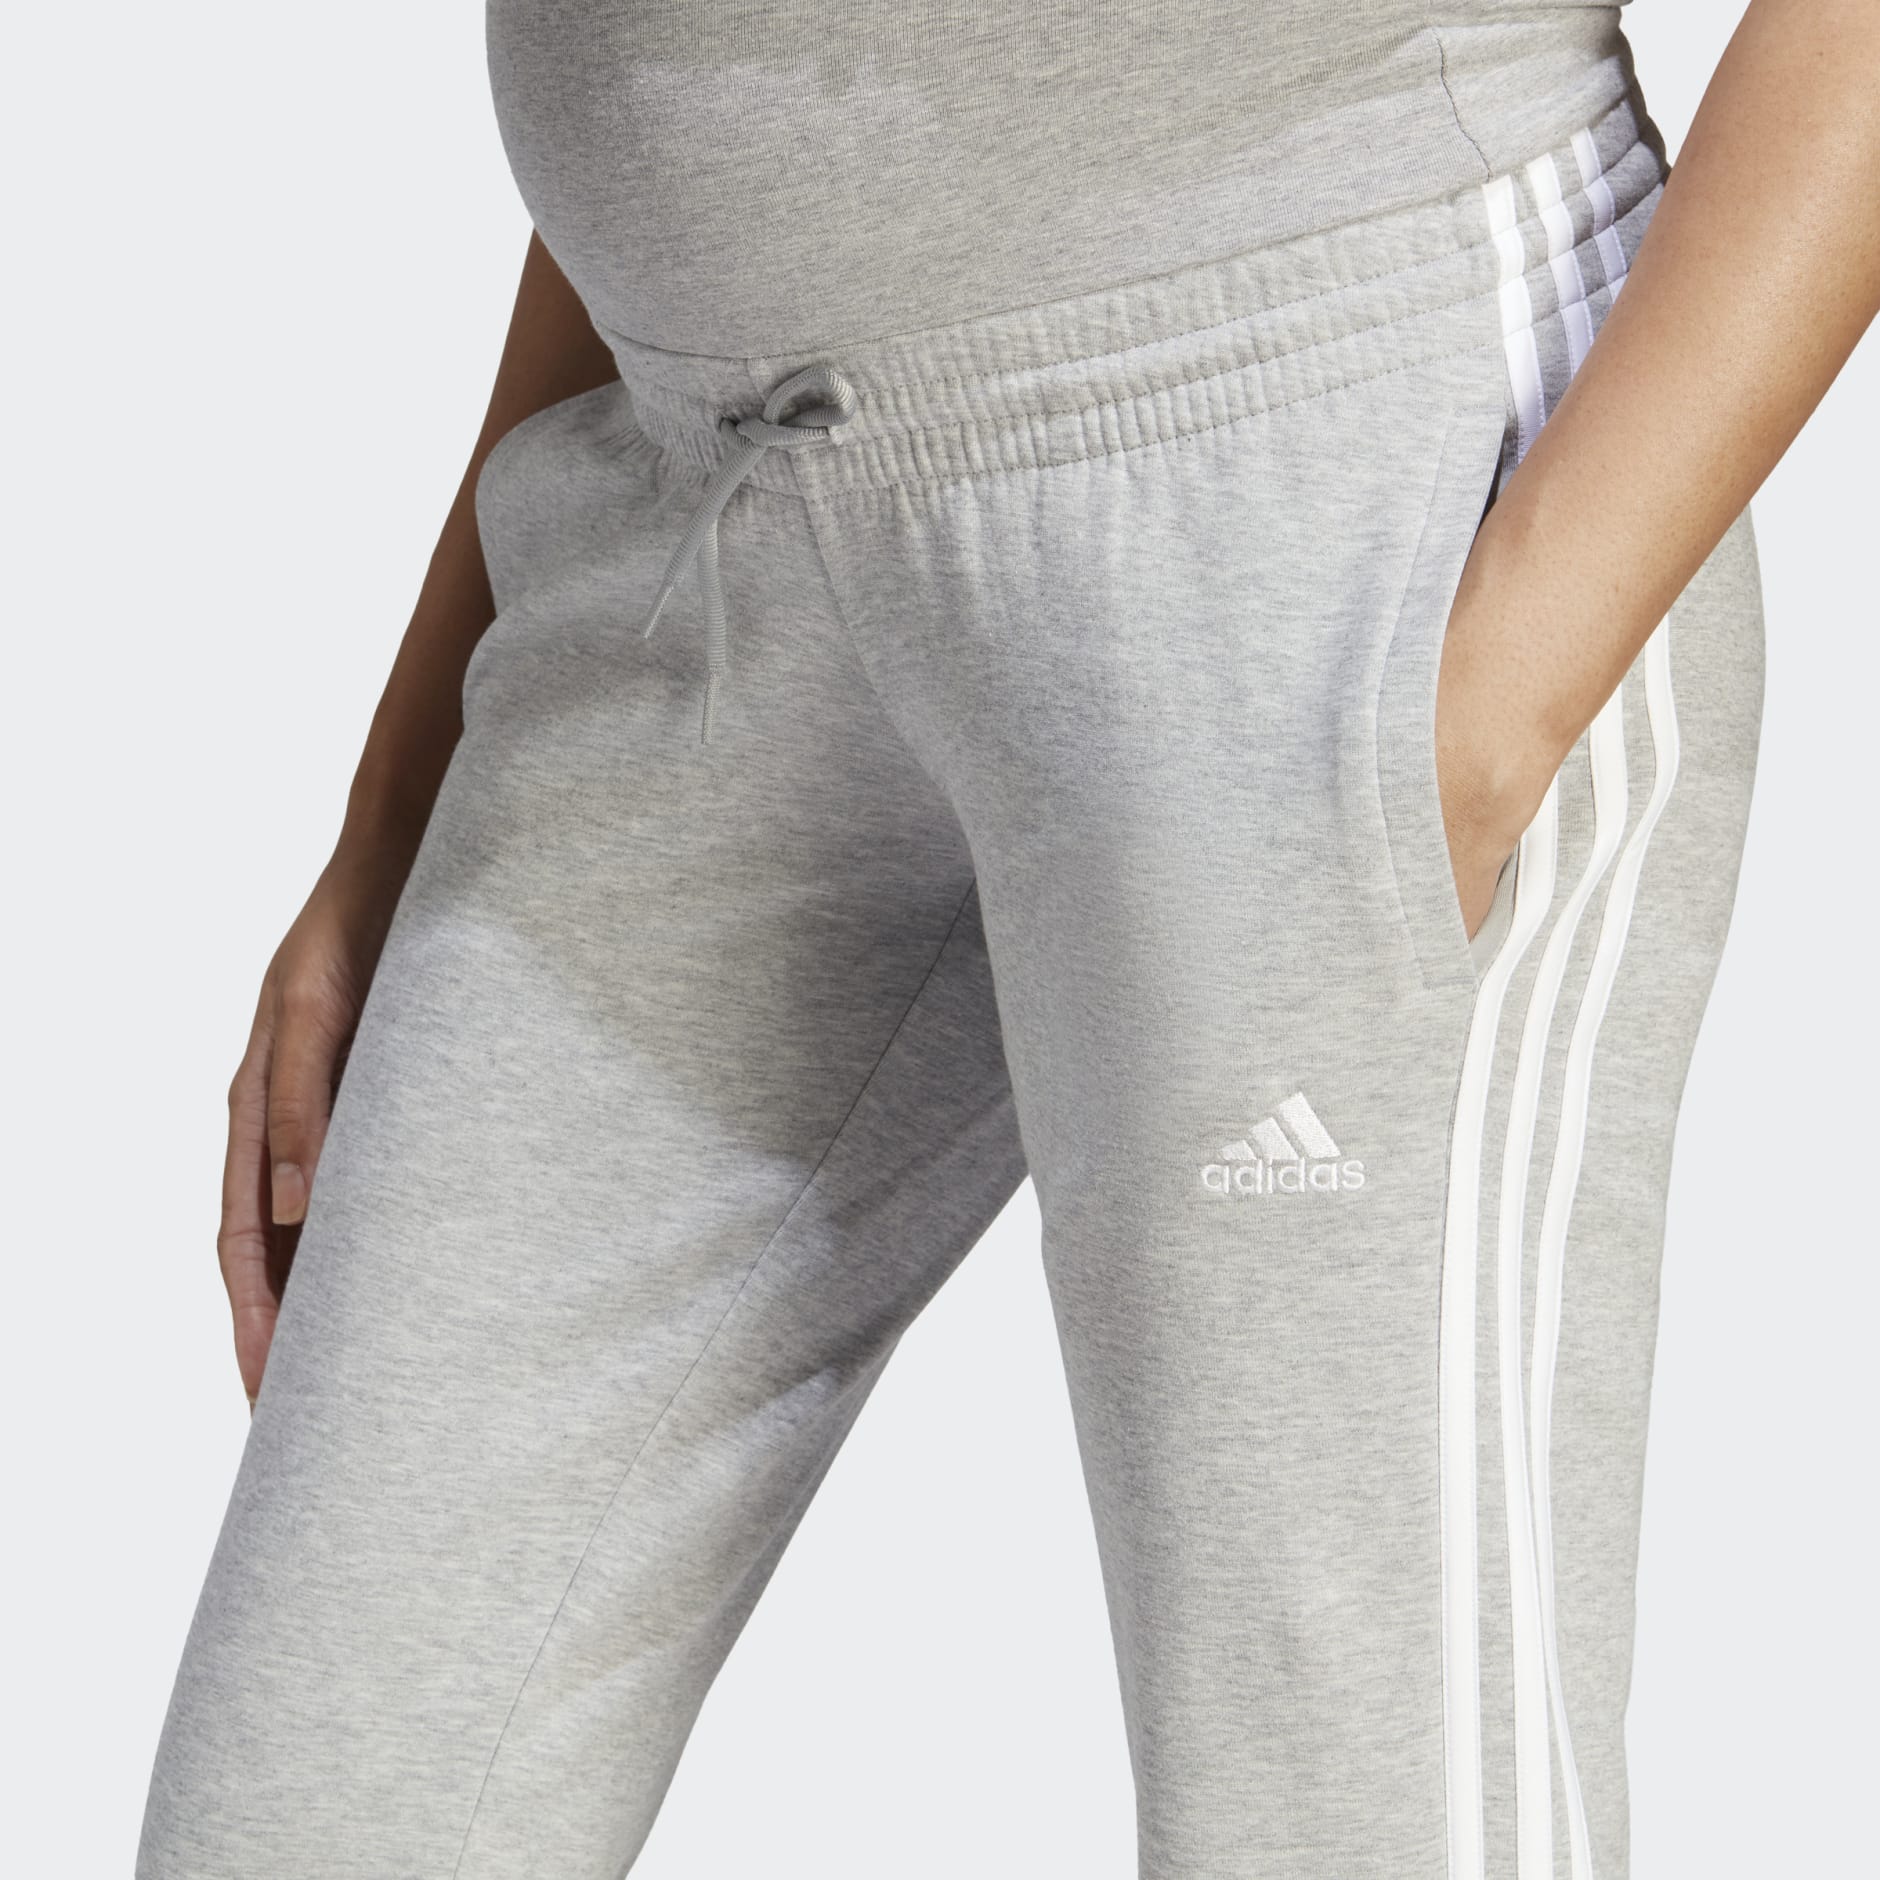 Clothing - Maternity Pants - Grey